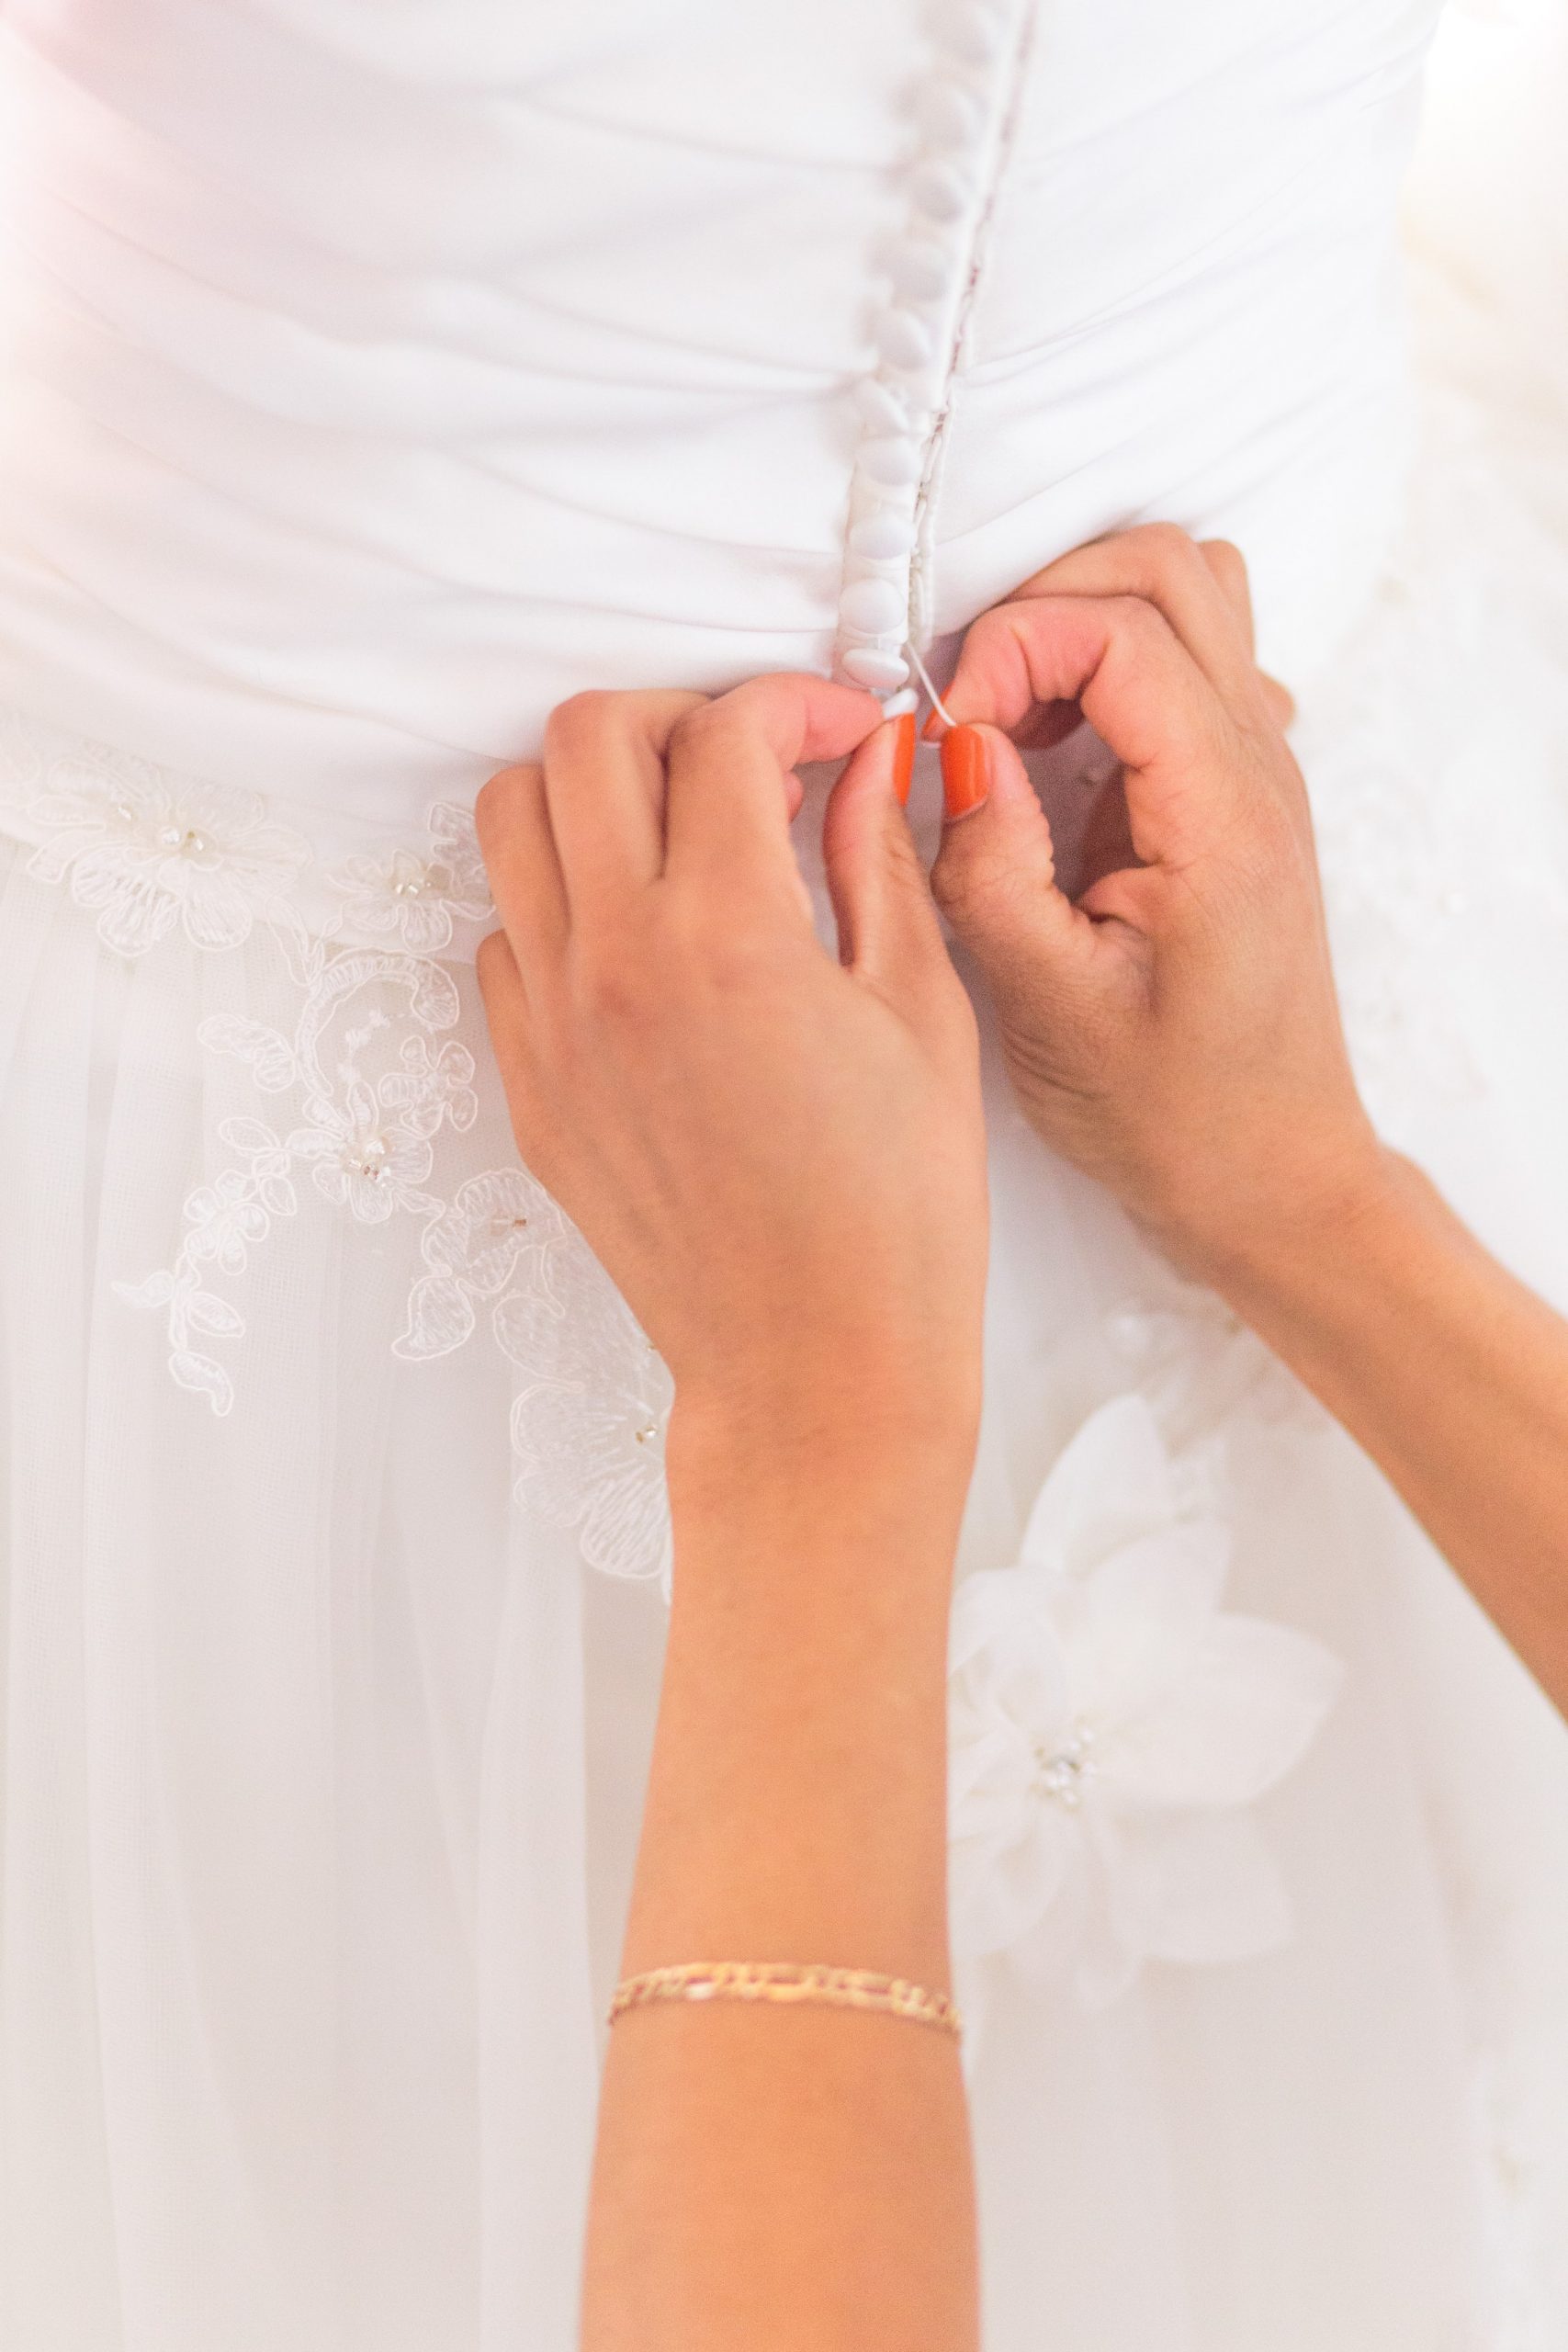 bridal alterations in progress by Rose N Silk expert bridal alterations